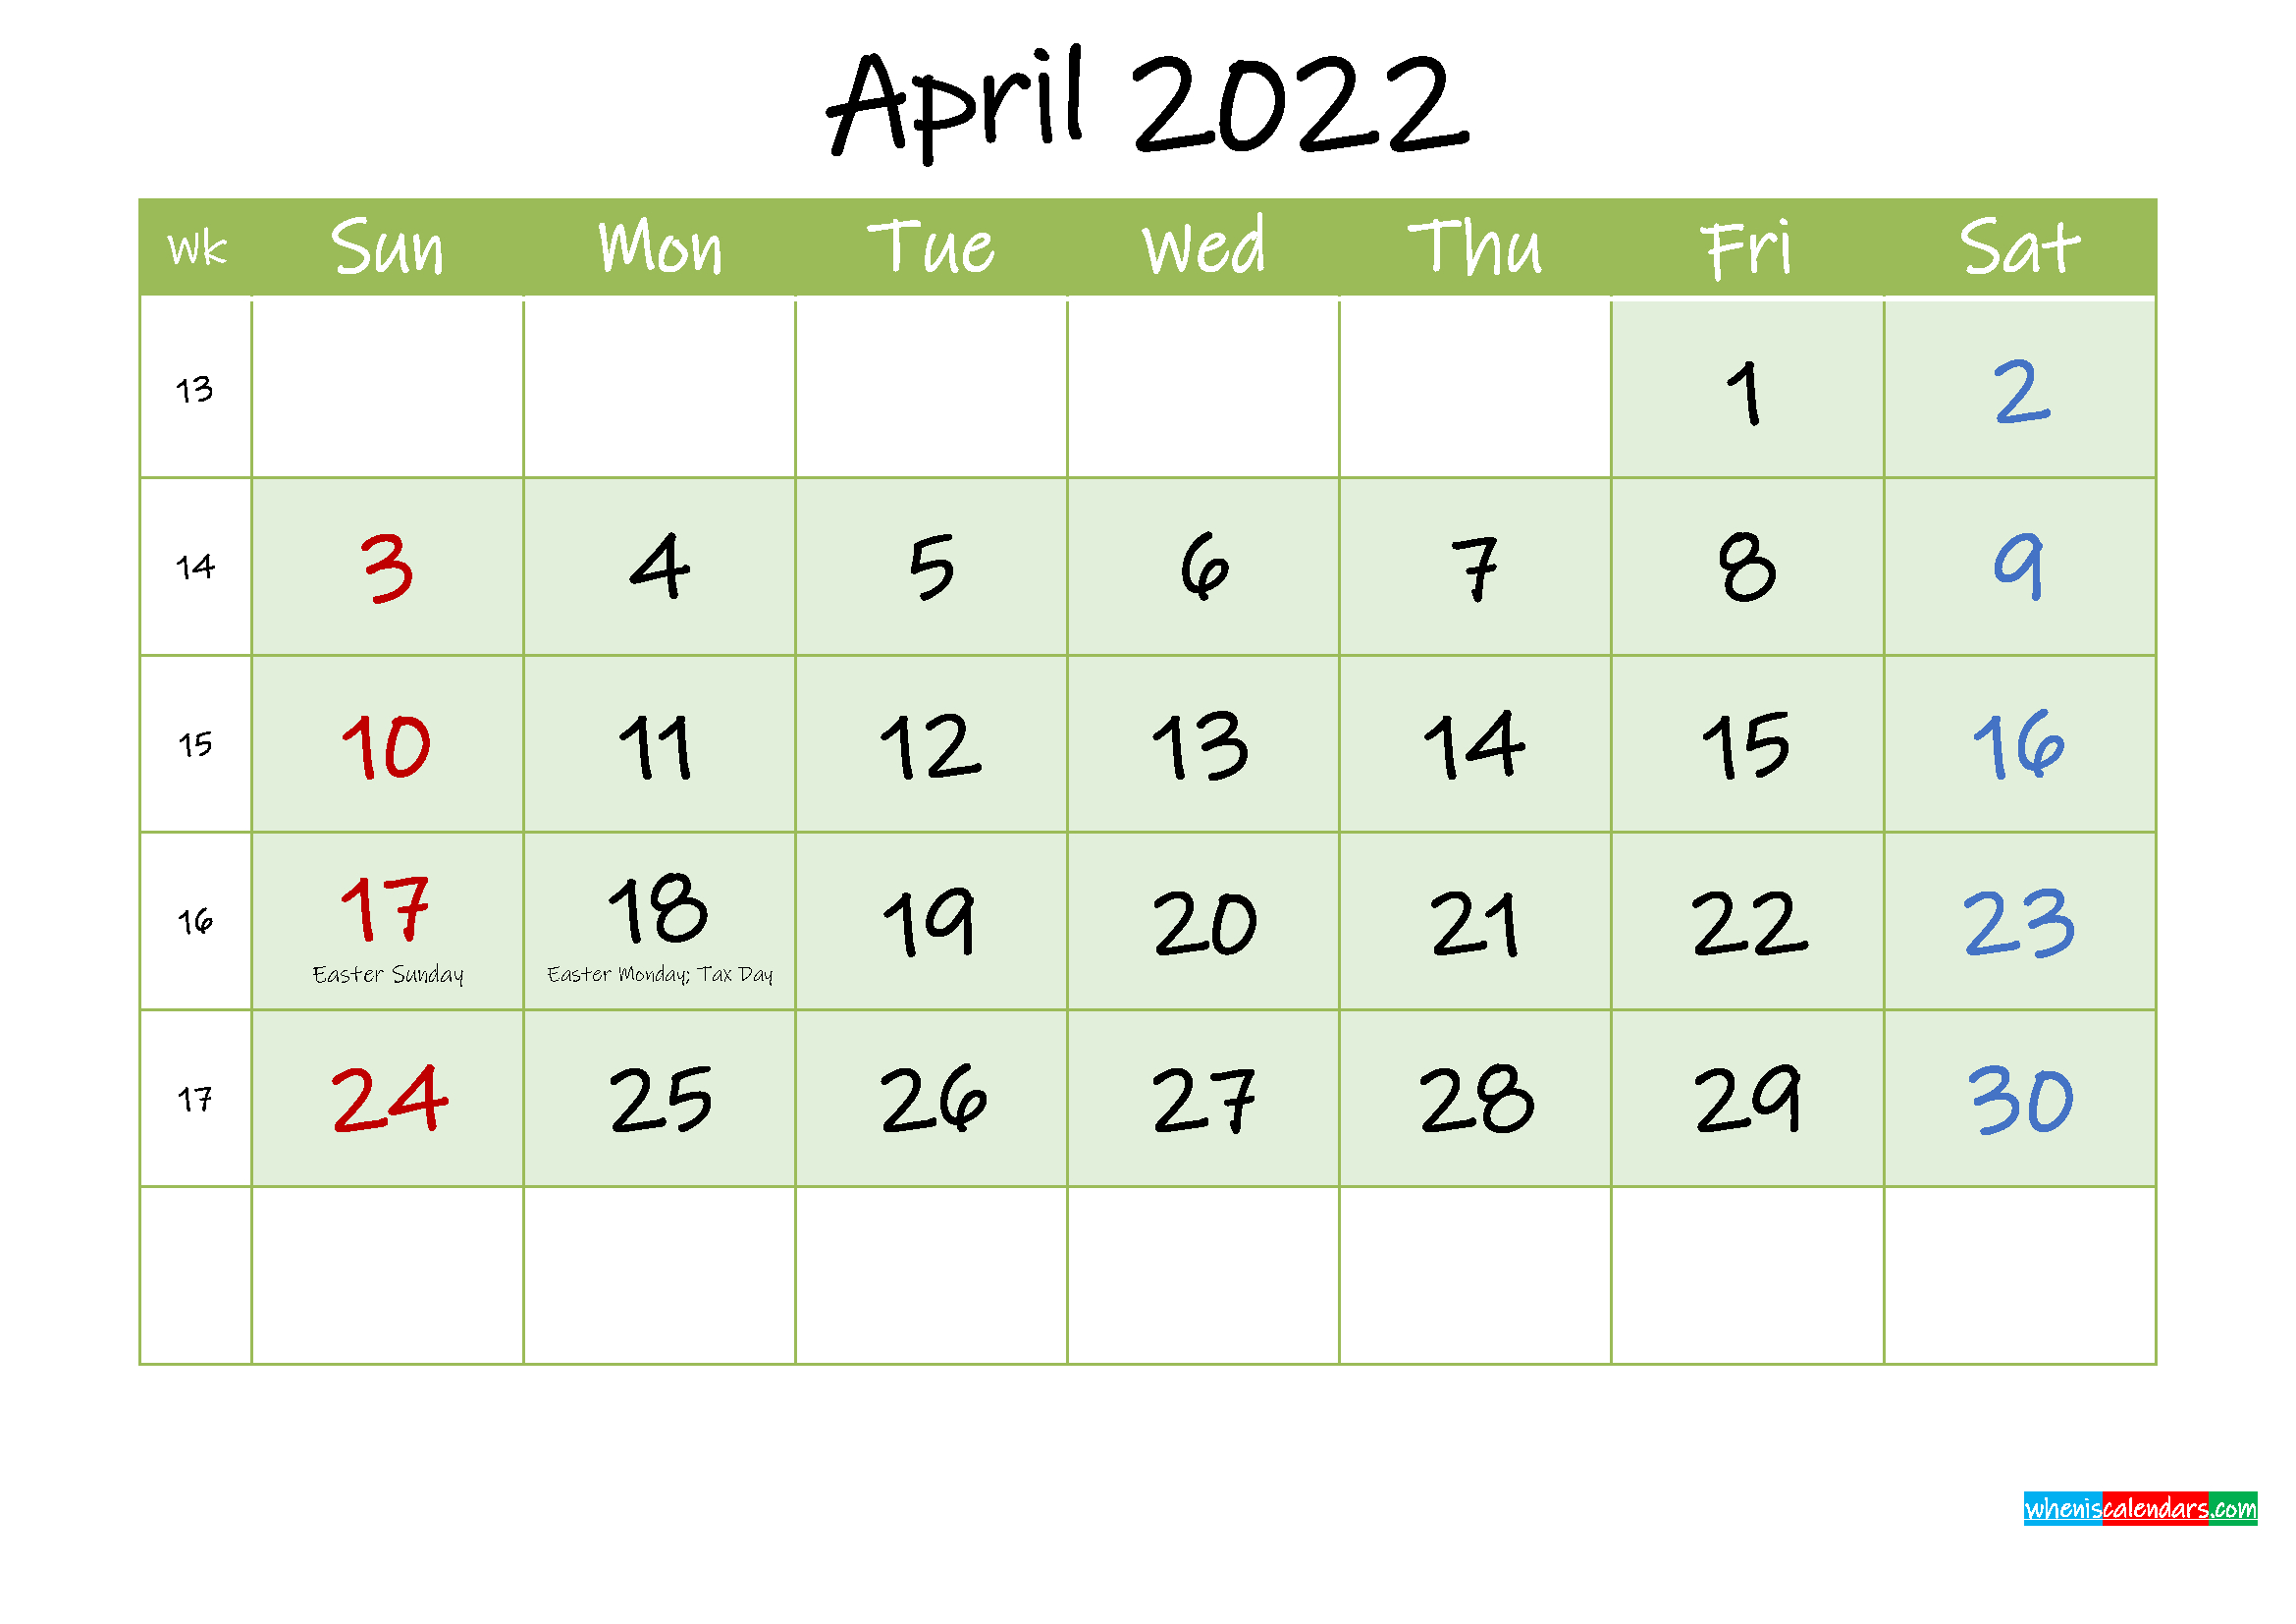 April 2022 Free Printable Calendar - Template Ink22M124  2022 Calendar Printable April